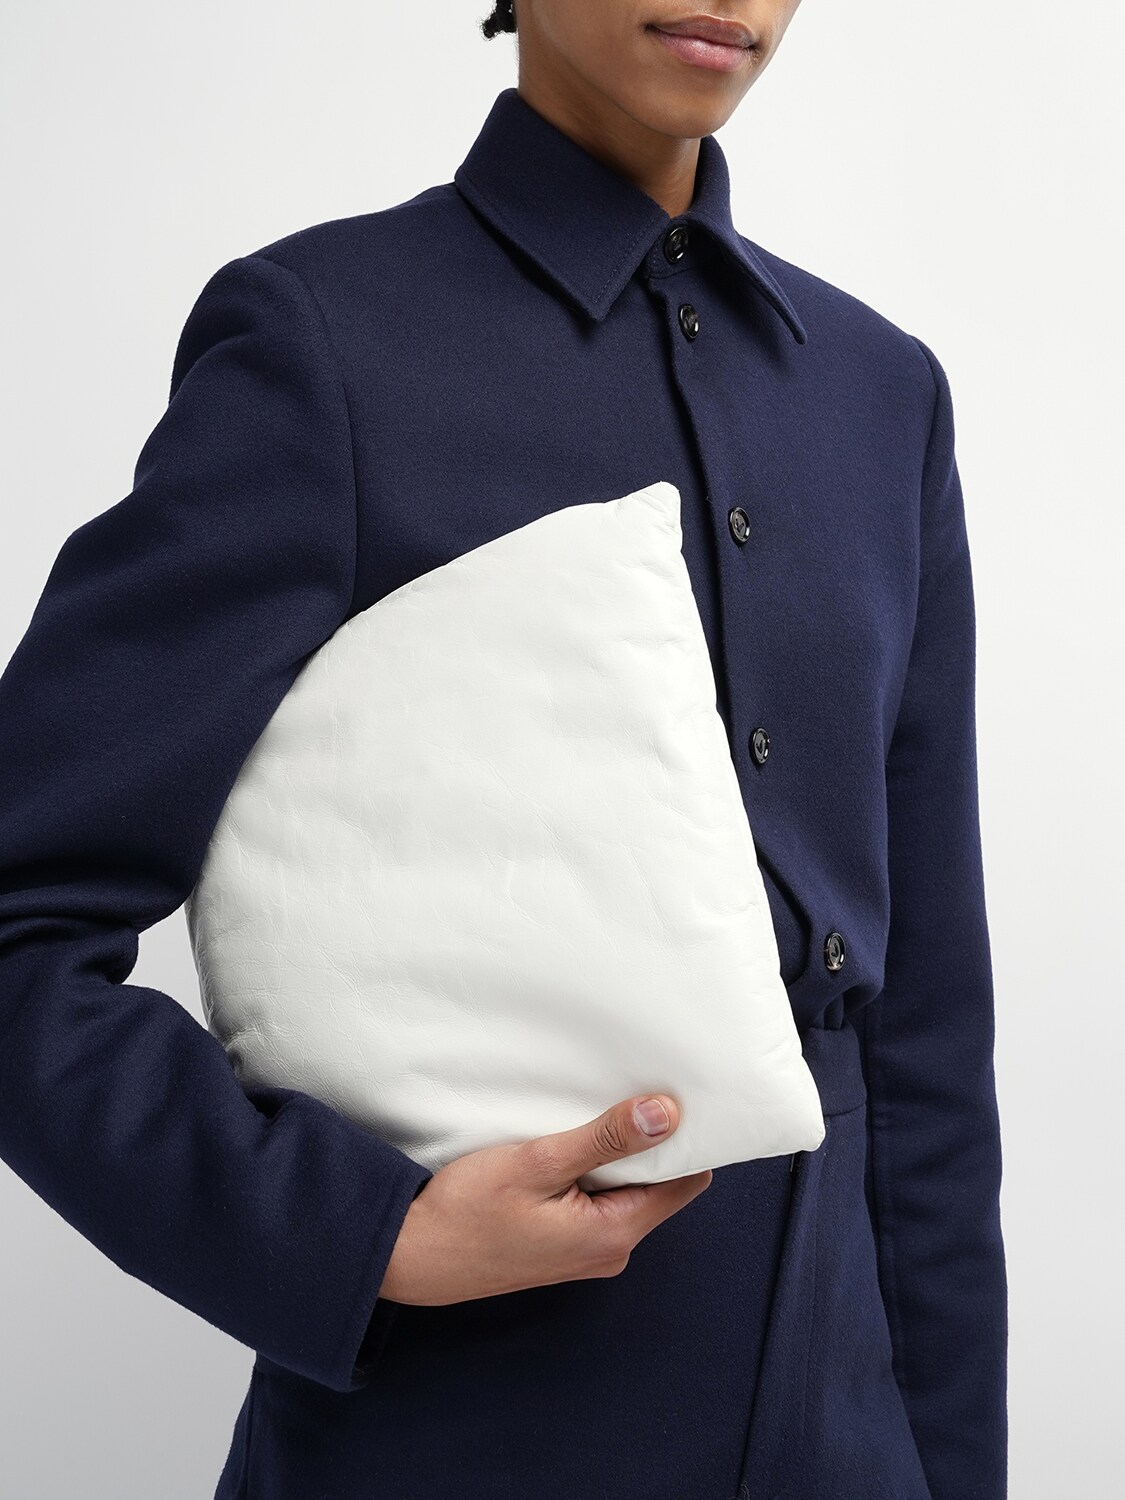 Shop Bottega Veneta Pillow Leather Clutch In White